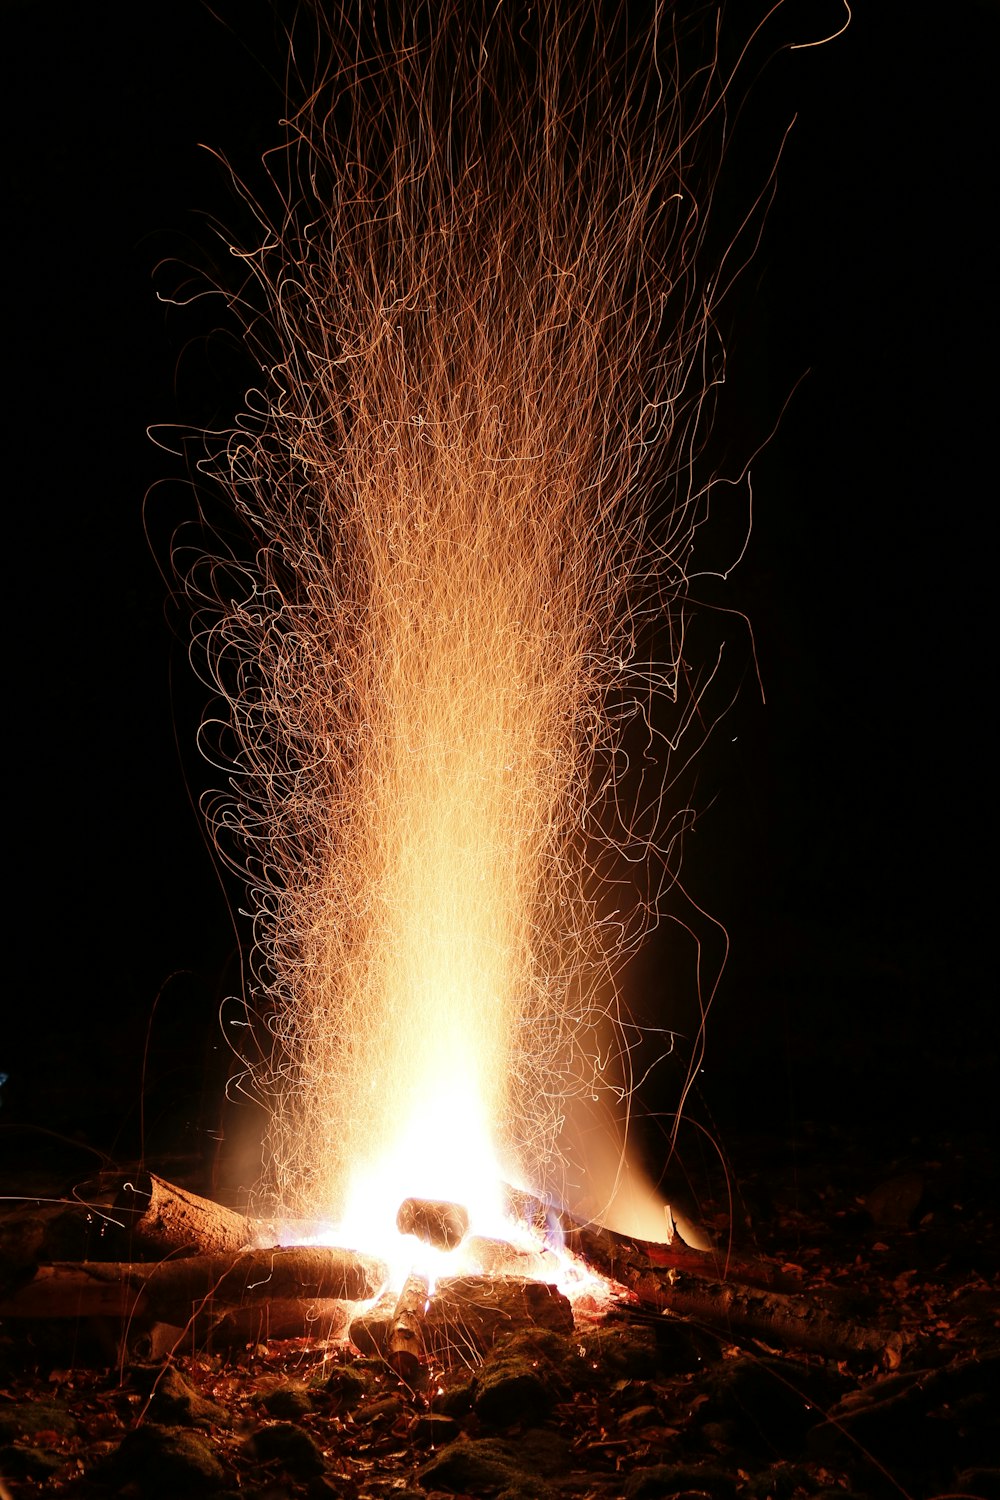 orange flame from bonfire